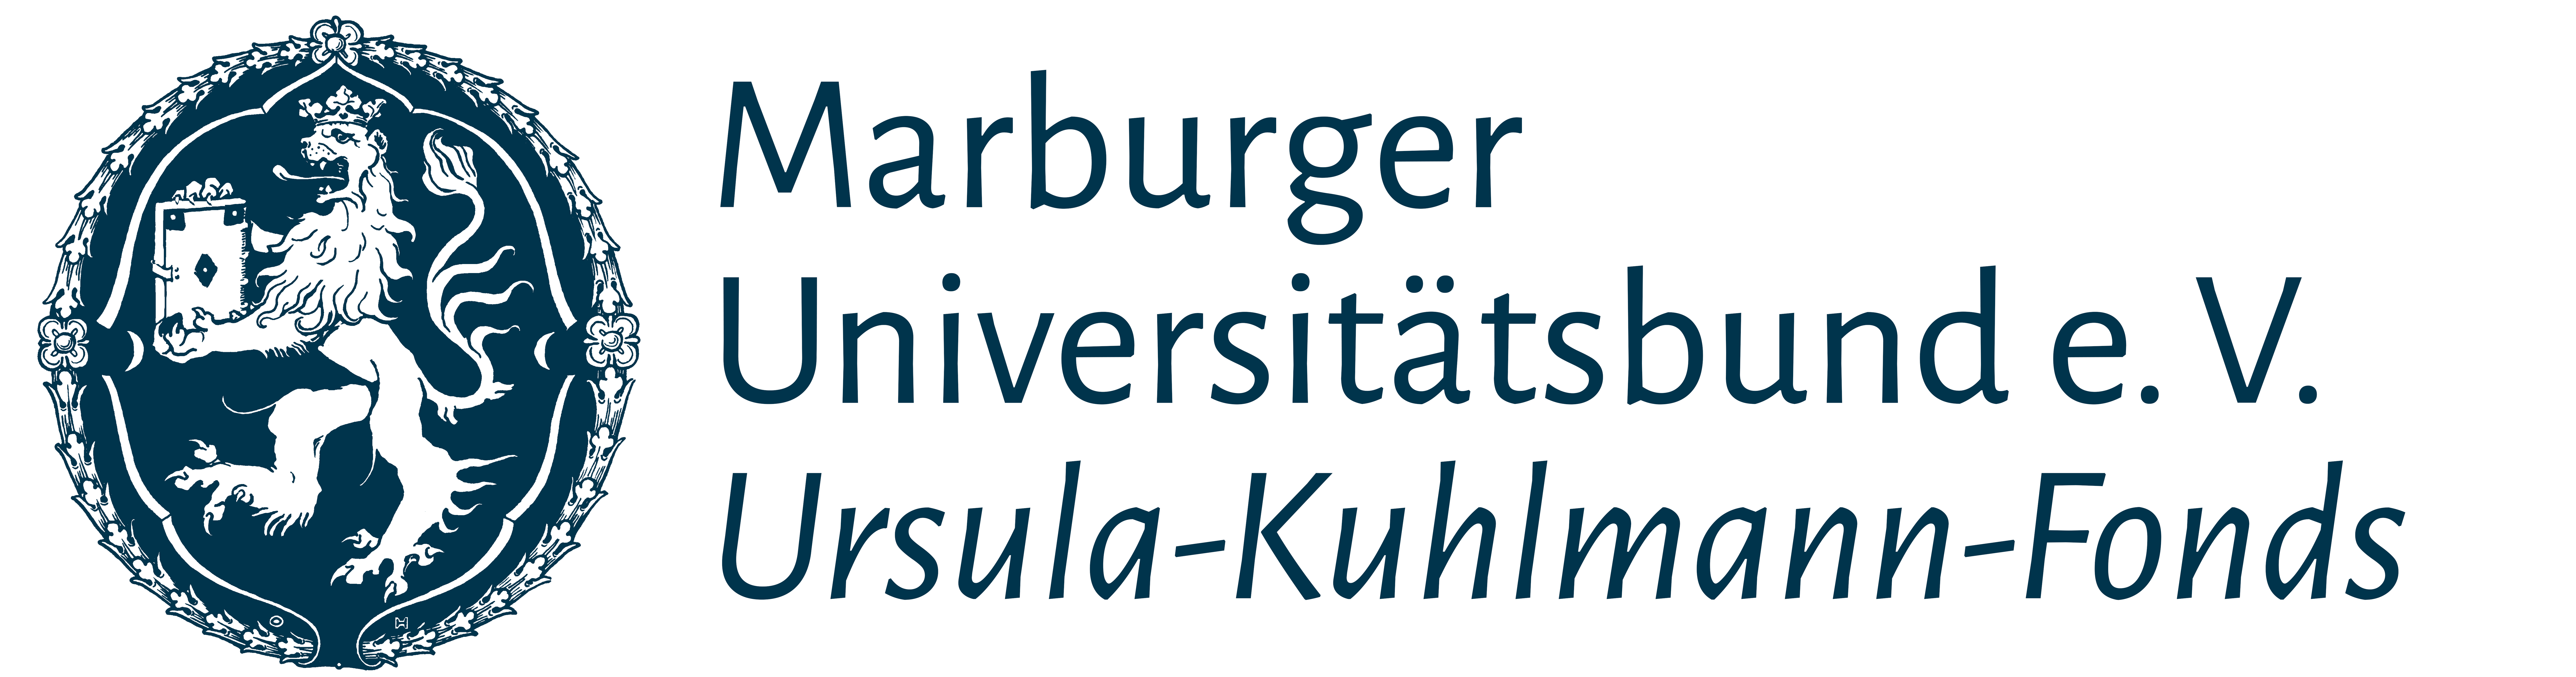 Ursula-Kuhlmann-Fonds-Logo